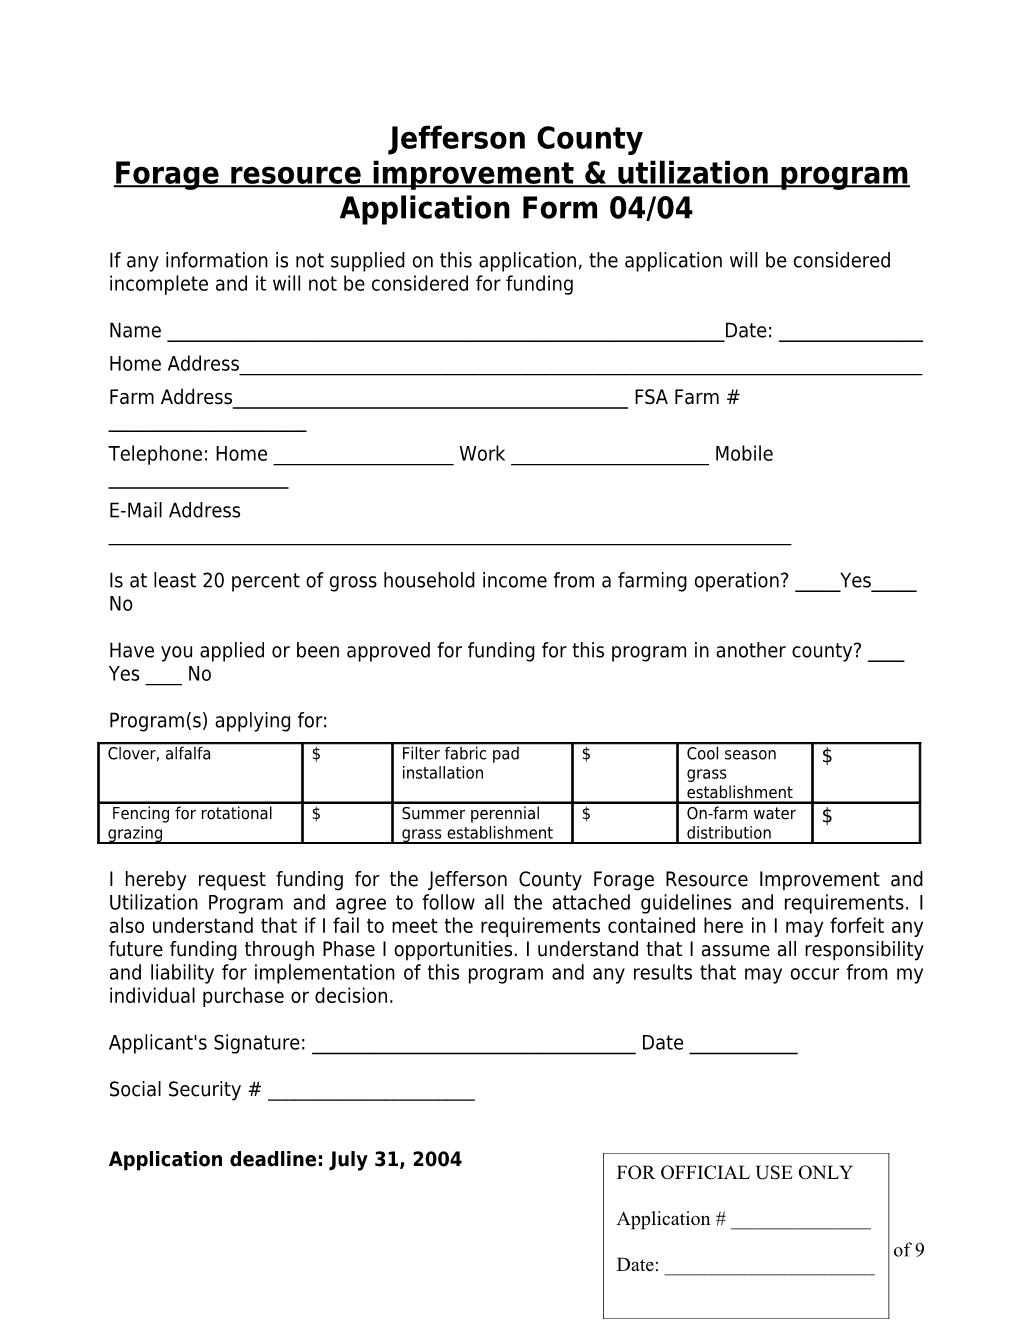 Jefferson County Forage Resource Improvement